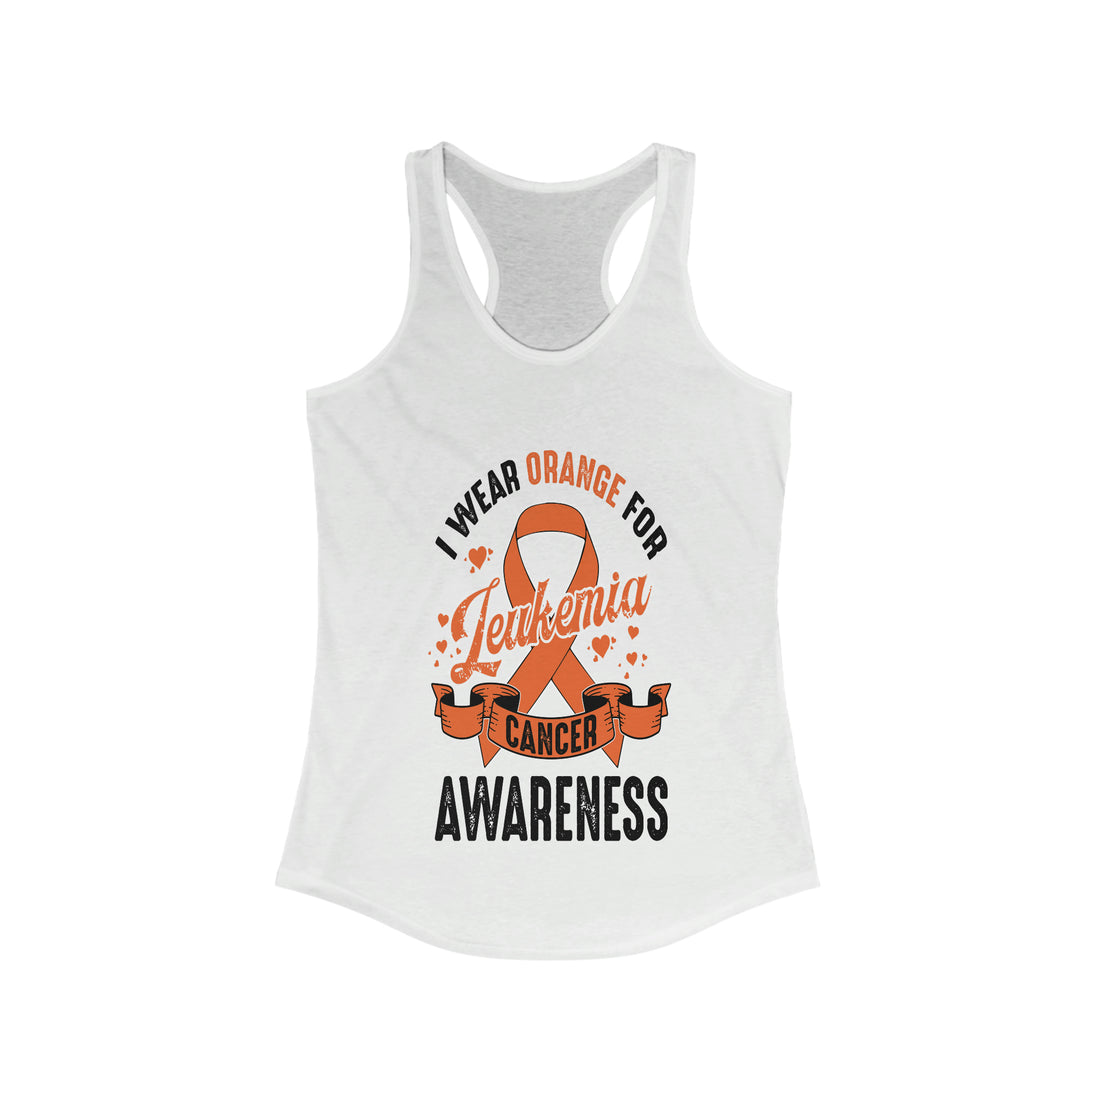 I Wear Orange For Leukemia Cancer Awareness - Racerback Tank Top